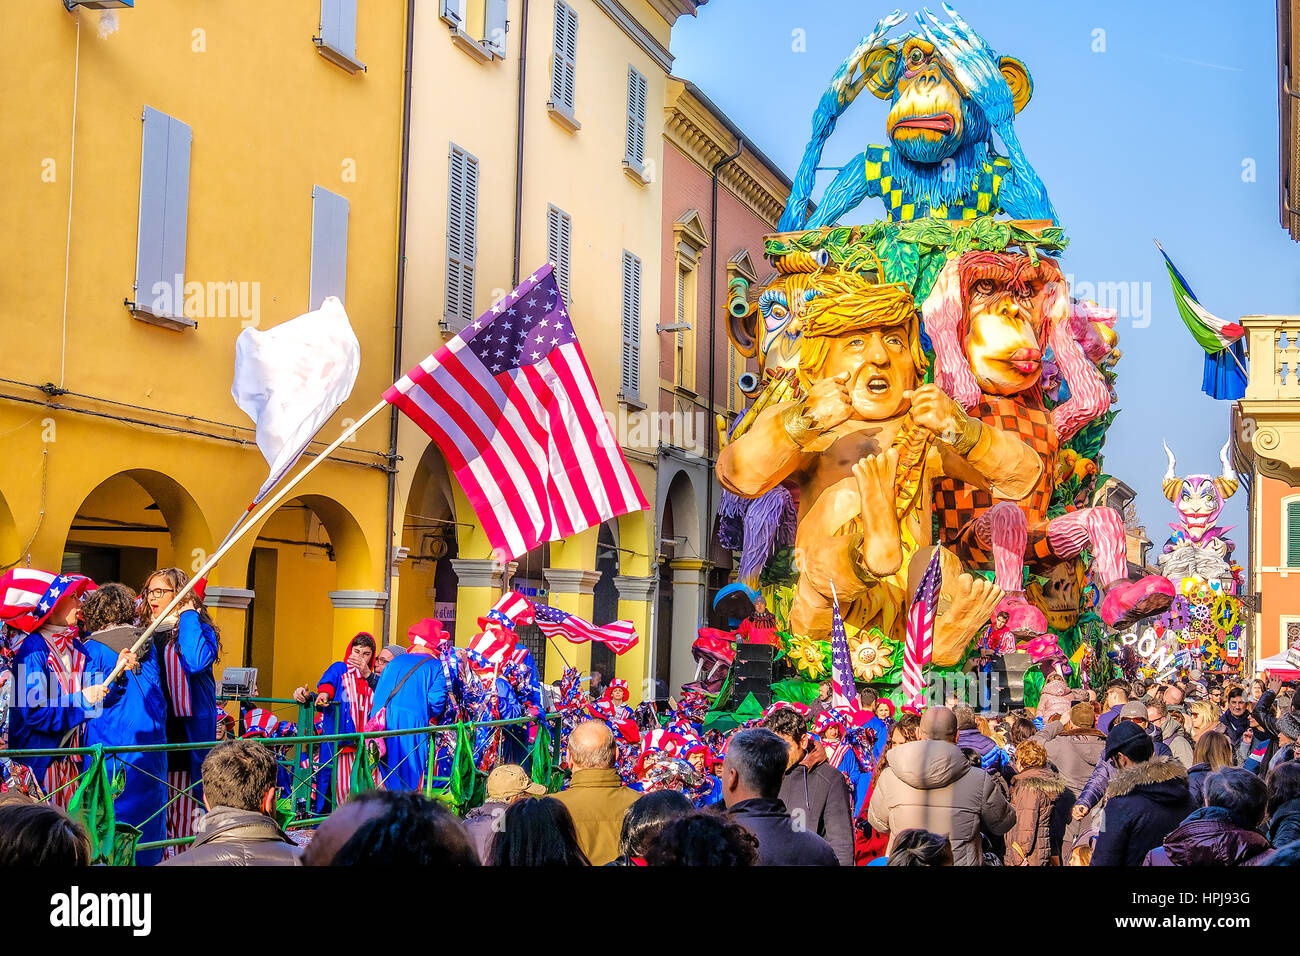 Cento, Italy, 19 feb 2017: Carnival of Cento a satirical parade float shows Donald Trump as Tarzan between monkeys Stock Photo